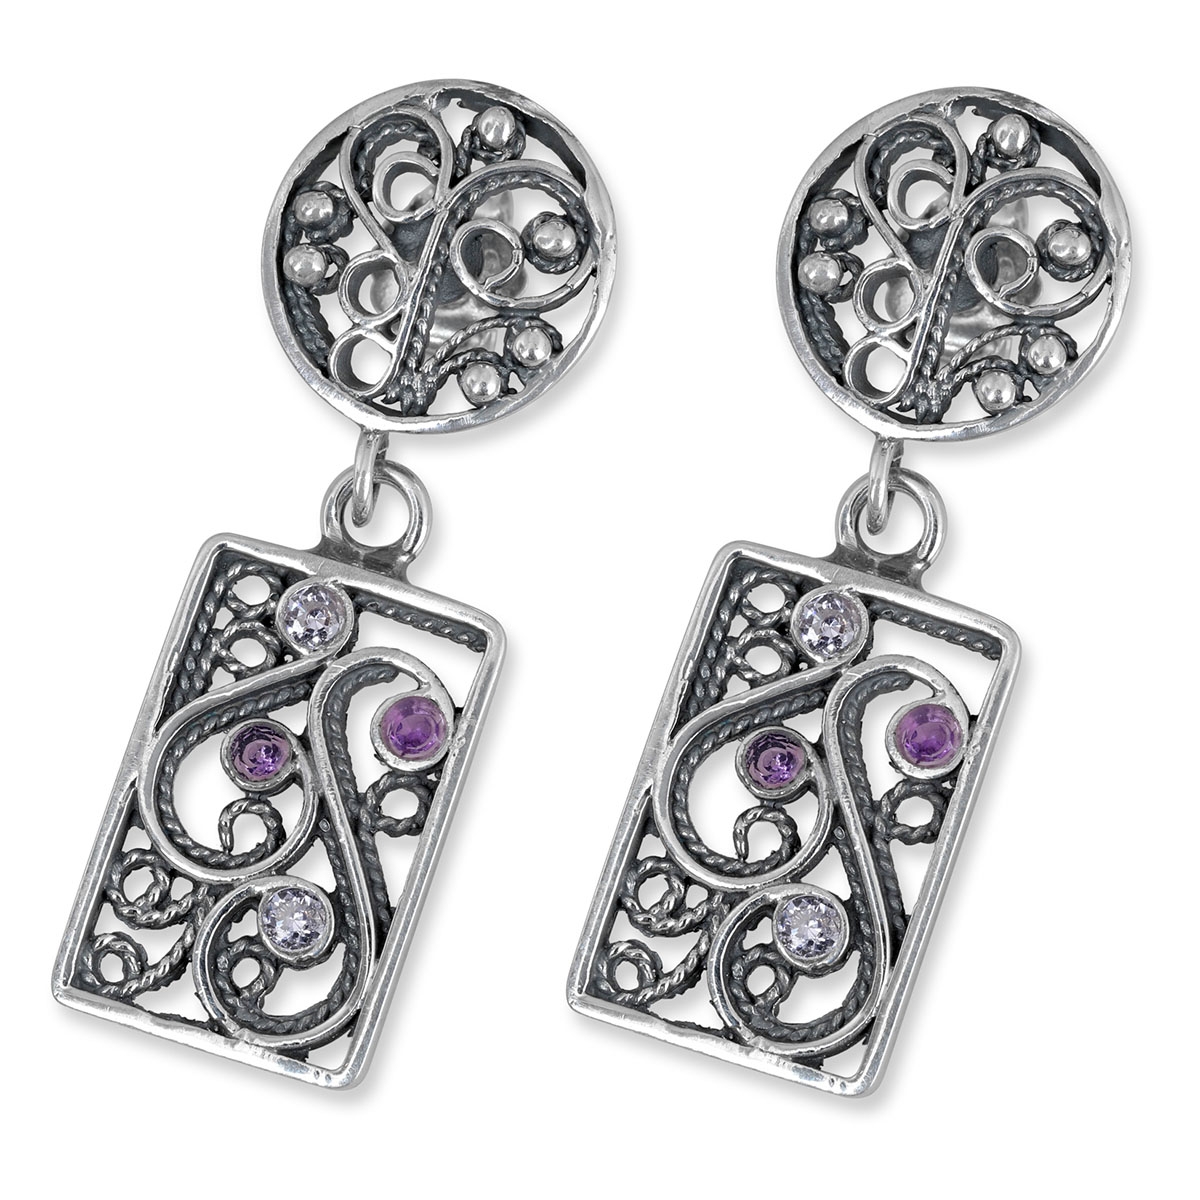 Rafael Jewelry Filigree Rectangular Sterling Silver Earrings - Amethyst and Lavender  - 1